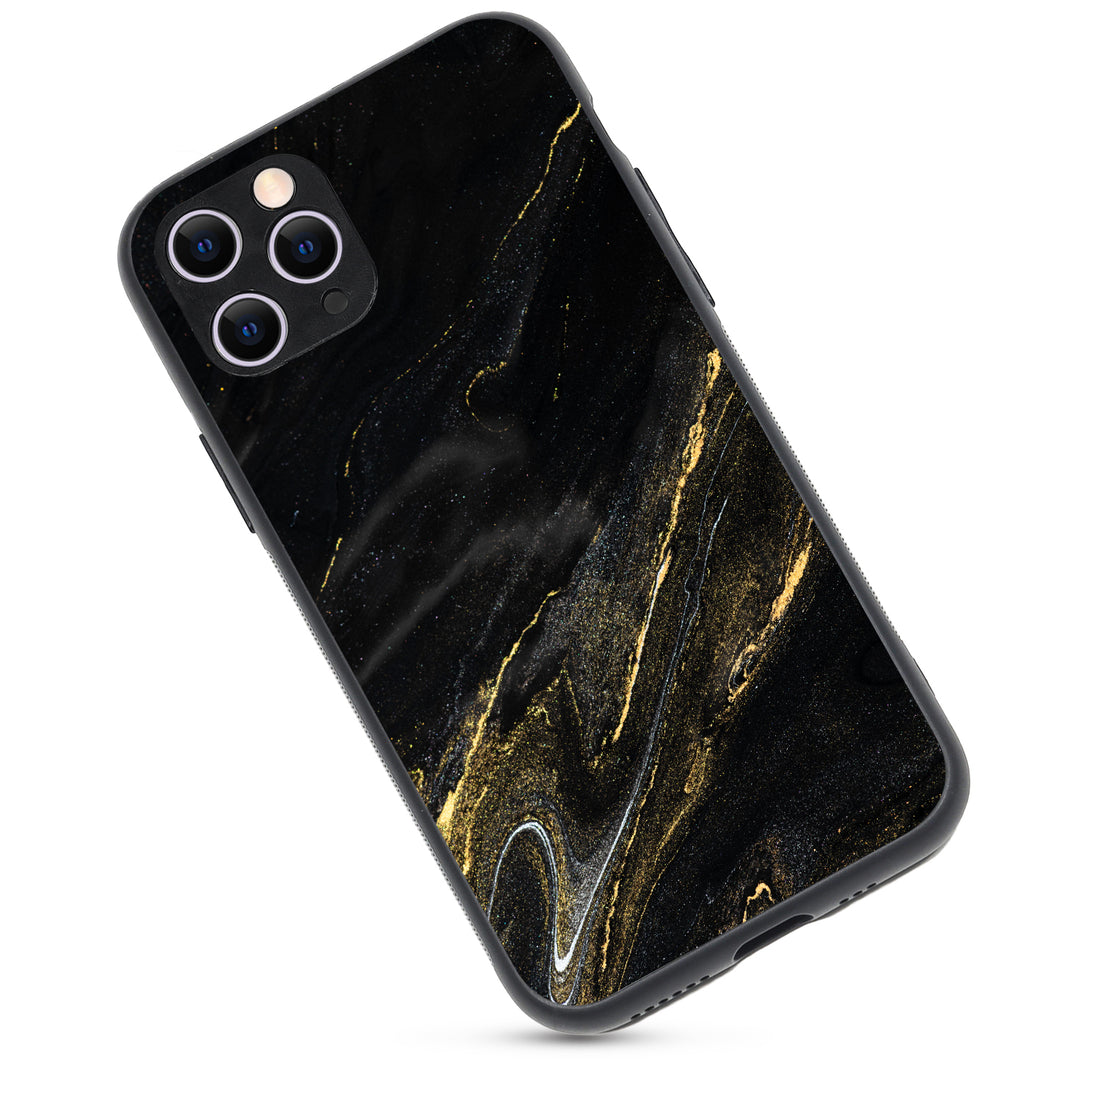 Black Golden Marble iPhone 11 Pro Case